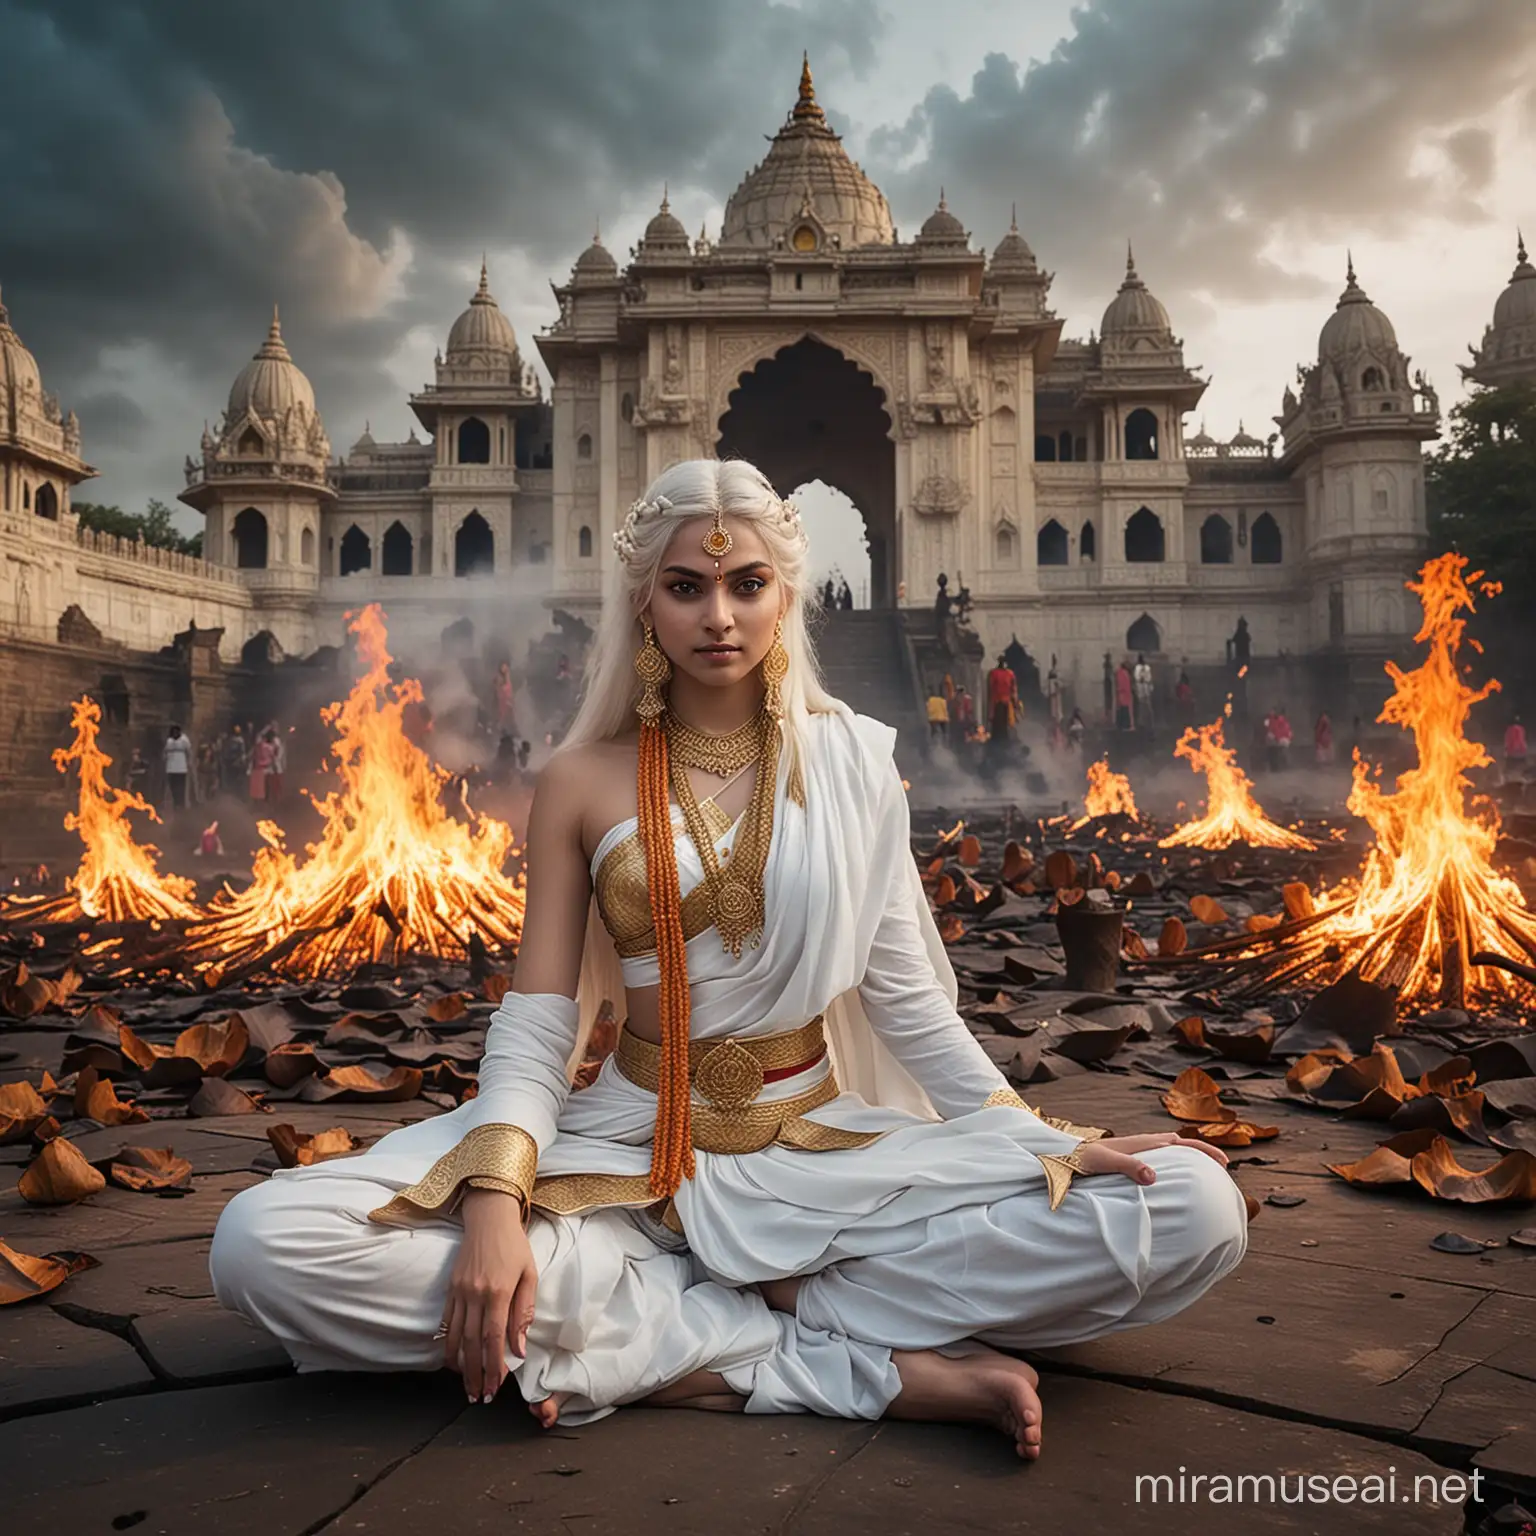 Hindu Empress Goddess Surrounded by Fire and Demonic Deities